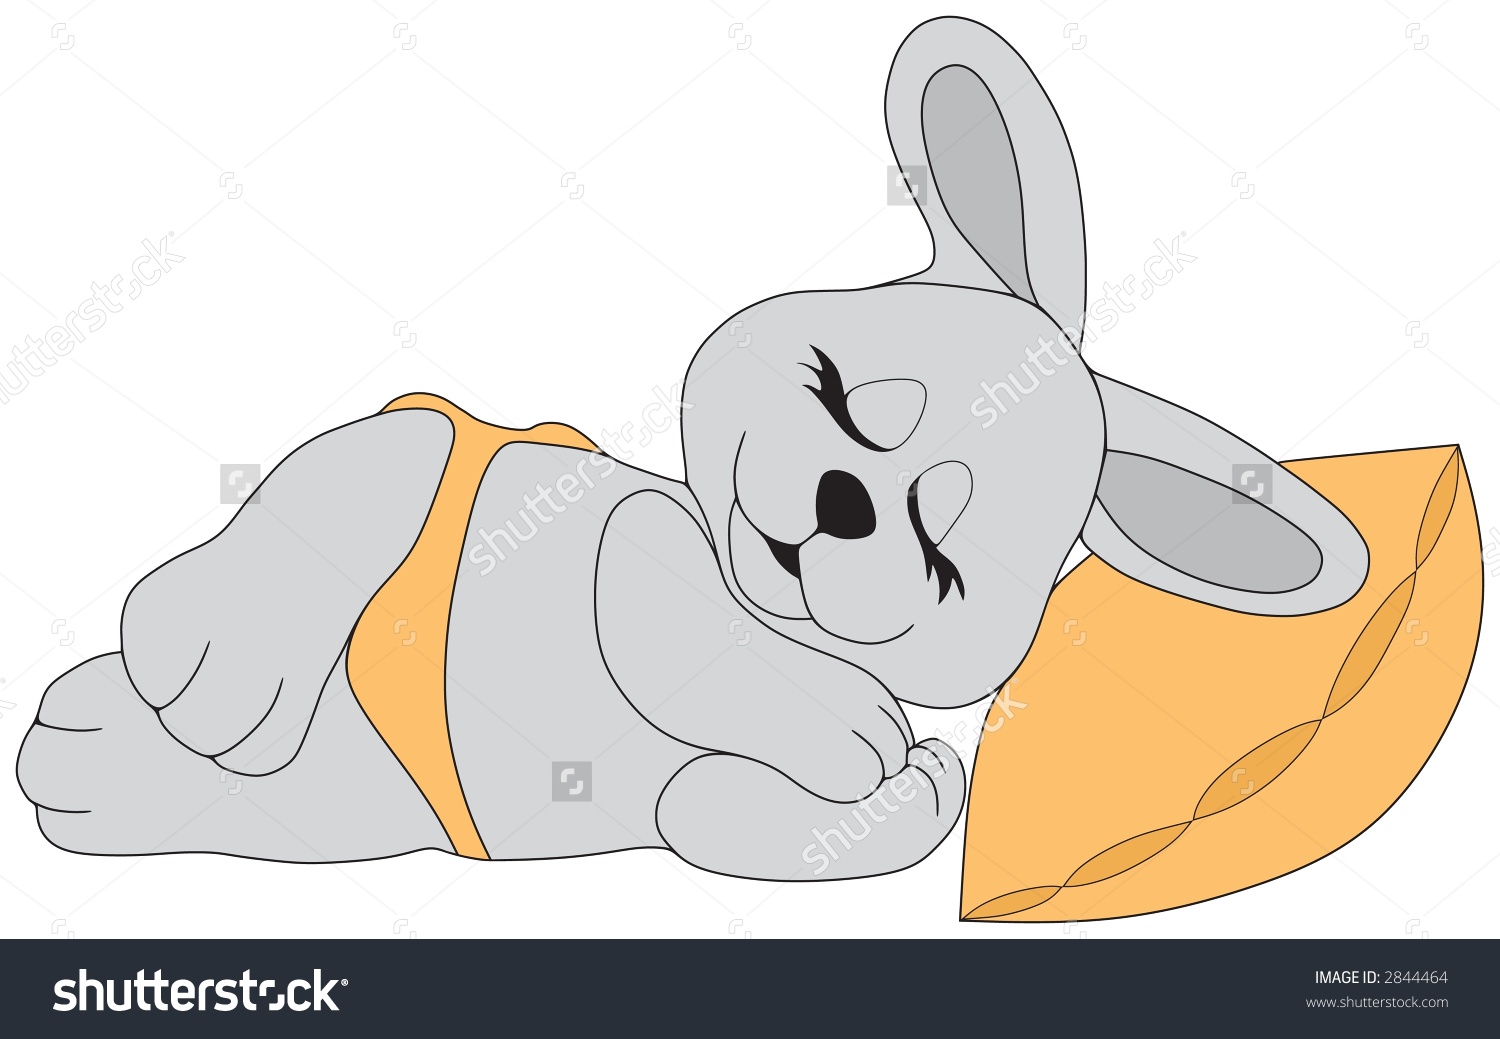 Sleeping rabbit clipart 